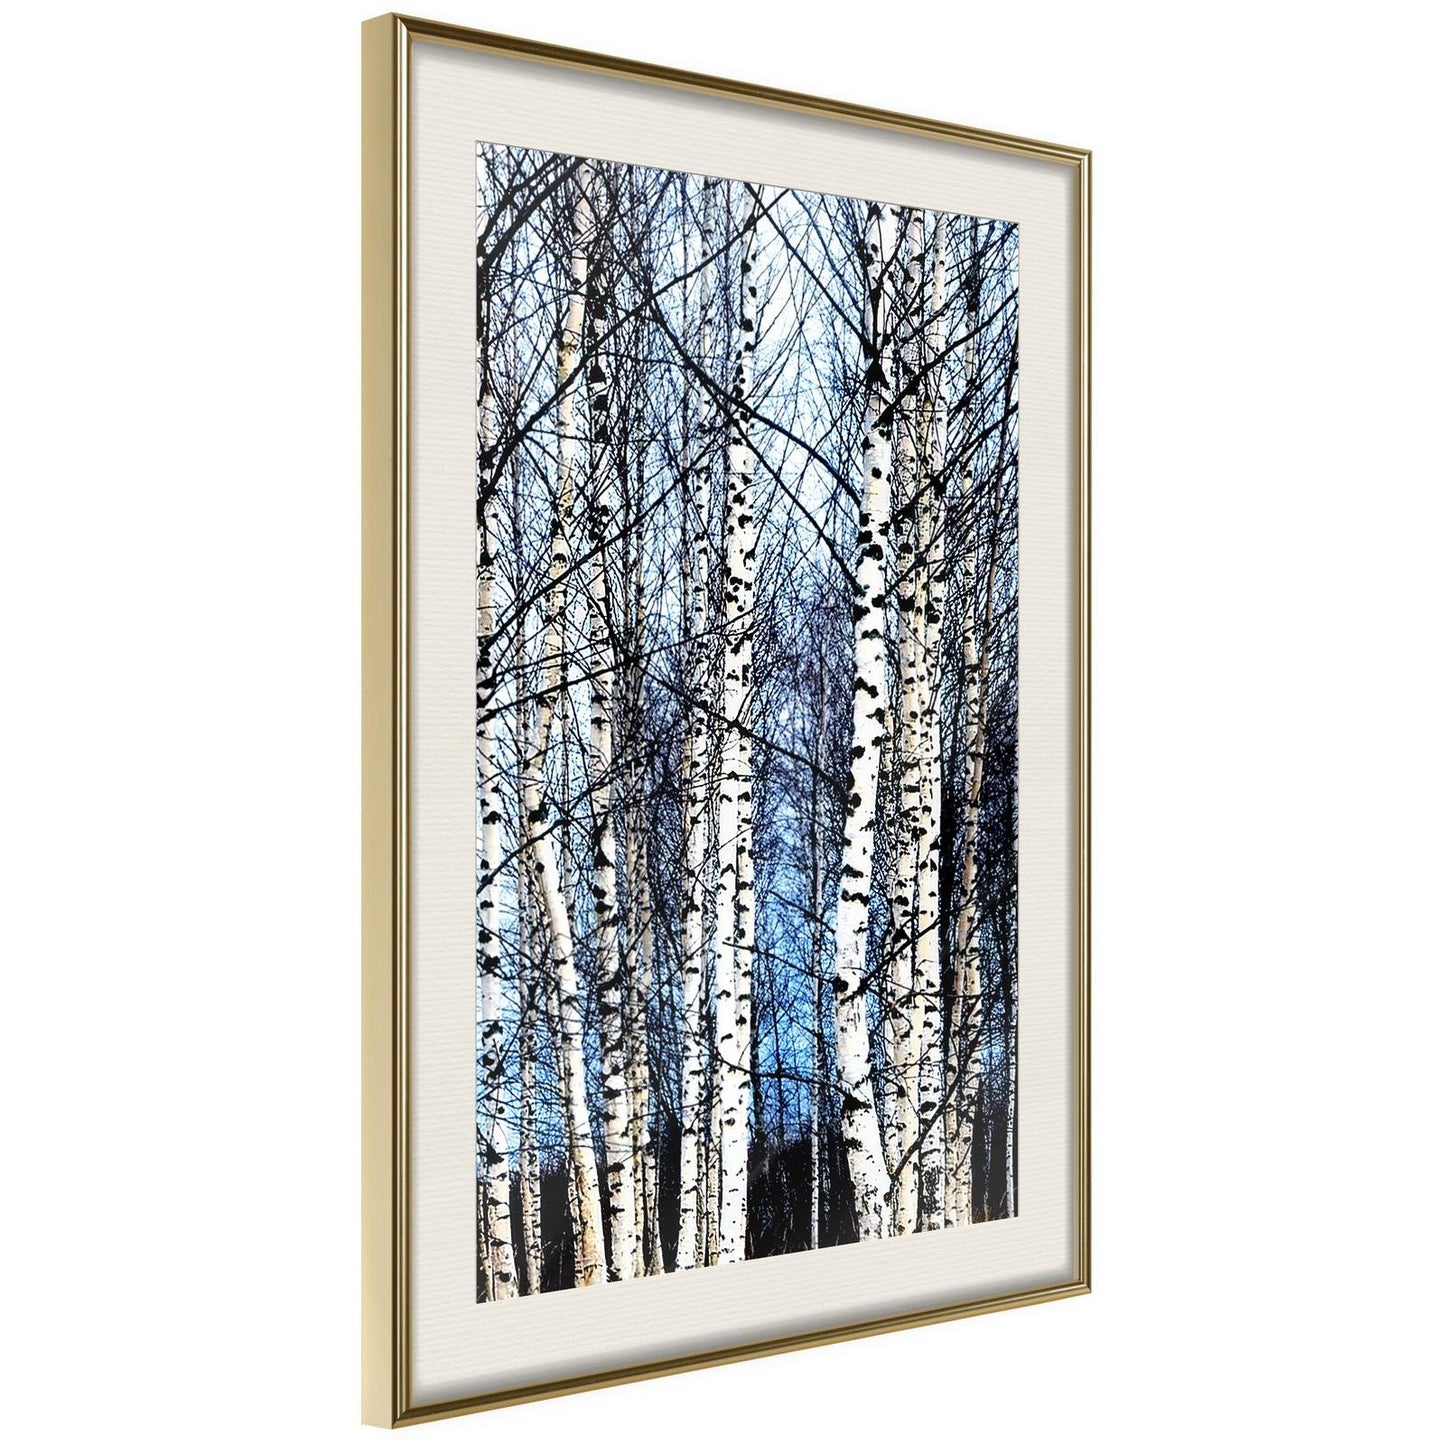 Winter Birch Trees